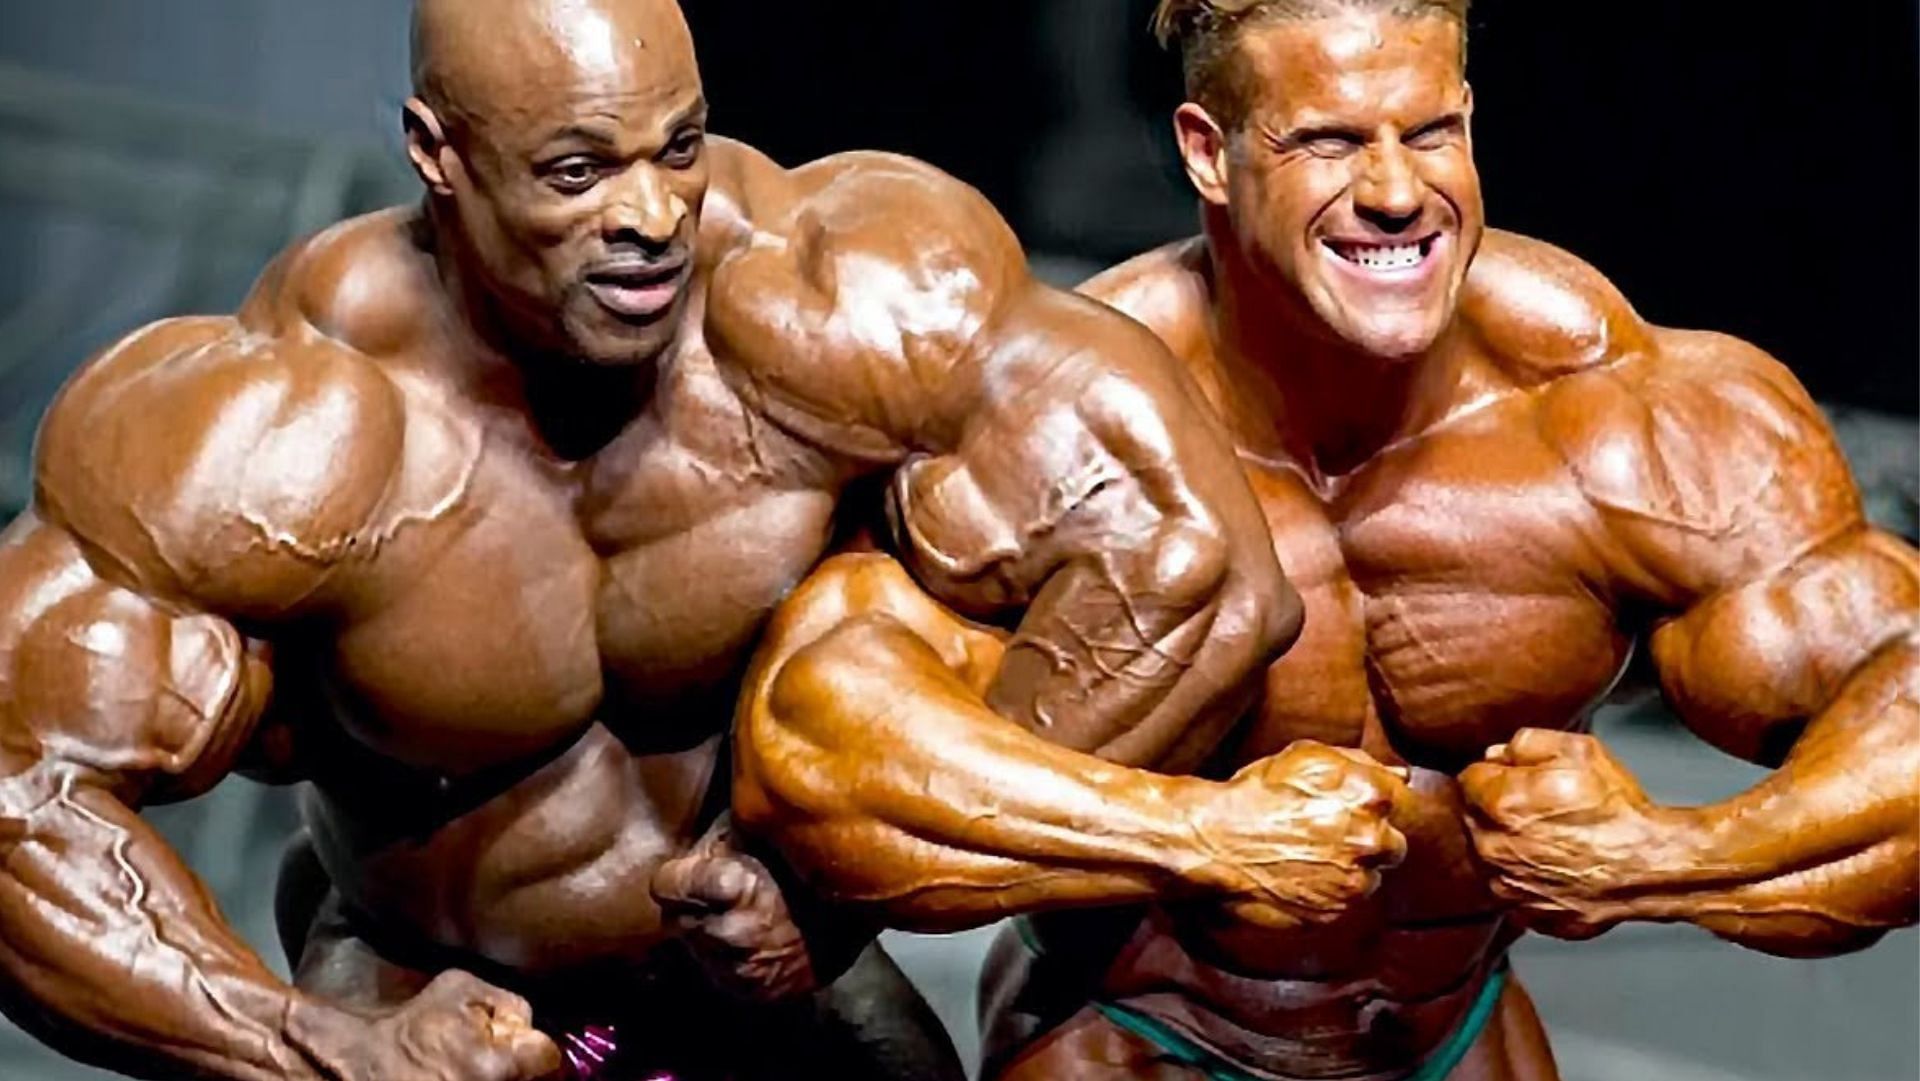 Jay Cutler shares his list of top 5 bodybuilders. (Photos via Google)